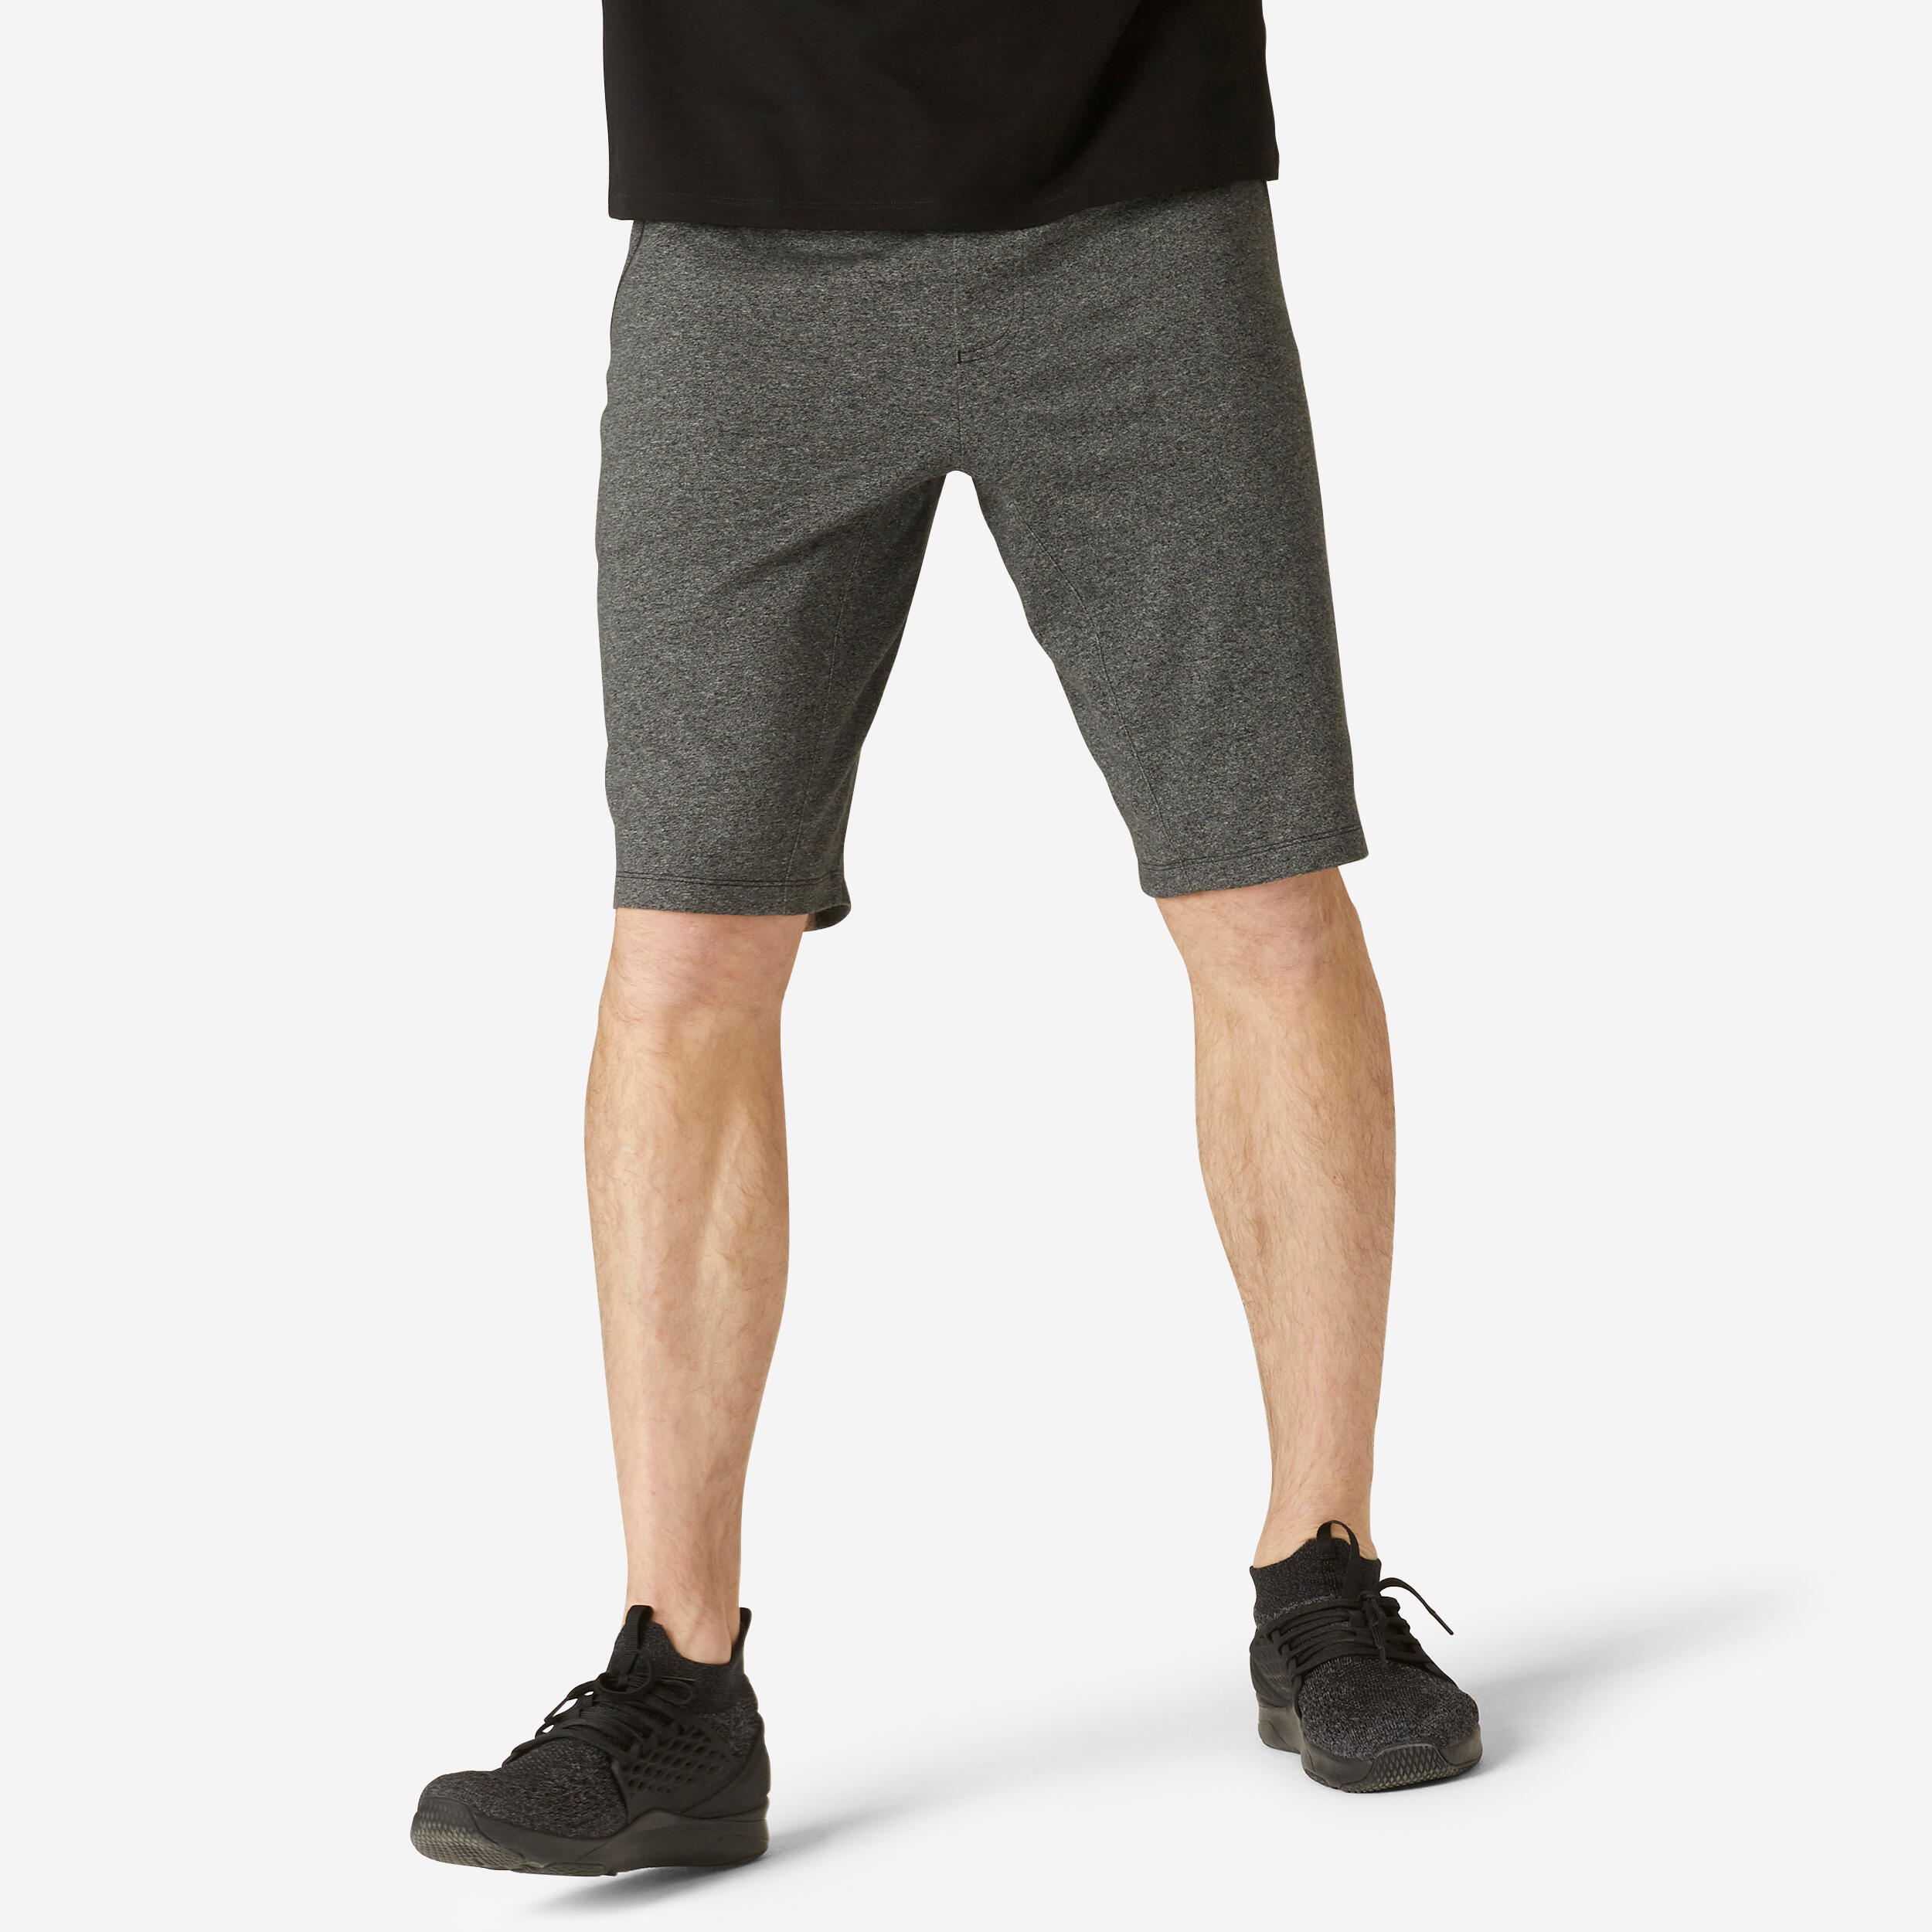 Short Zyzz sport shorts for men – Gym Generation®